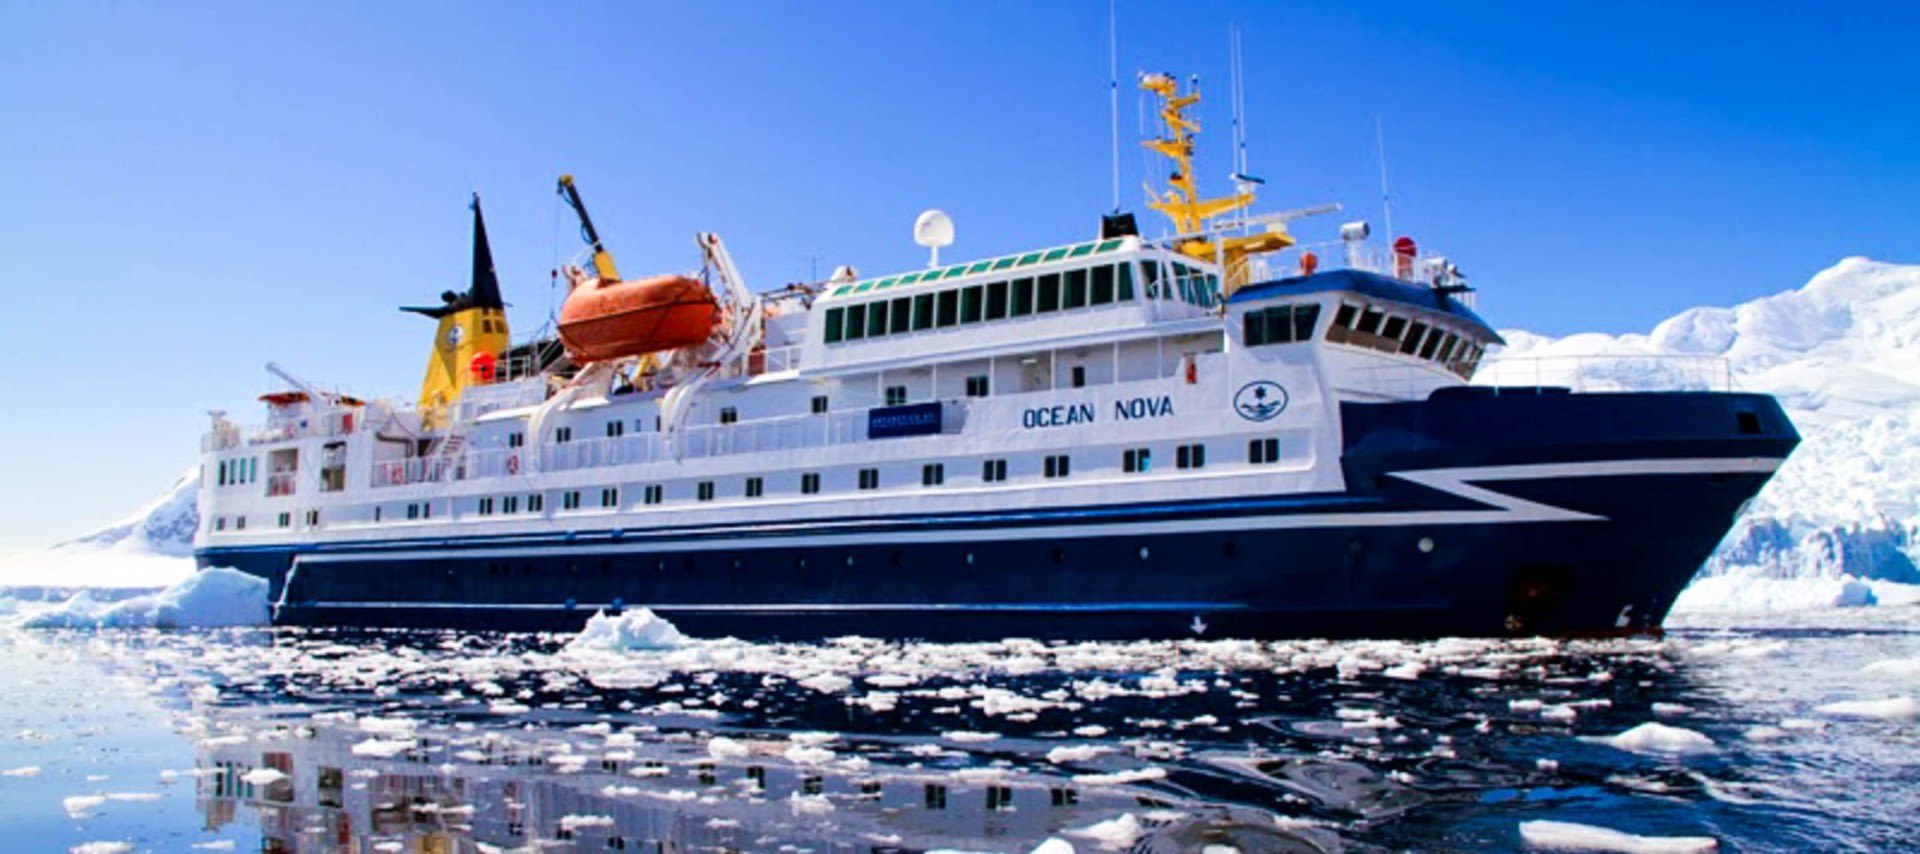 antarctica cruise from ushuaia